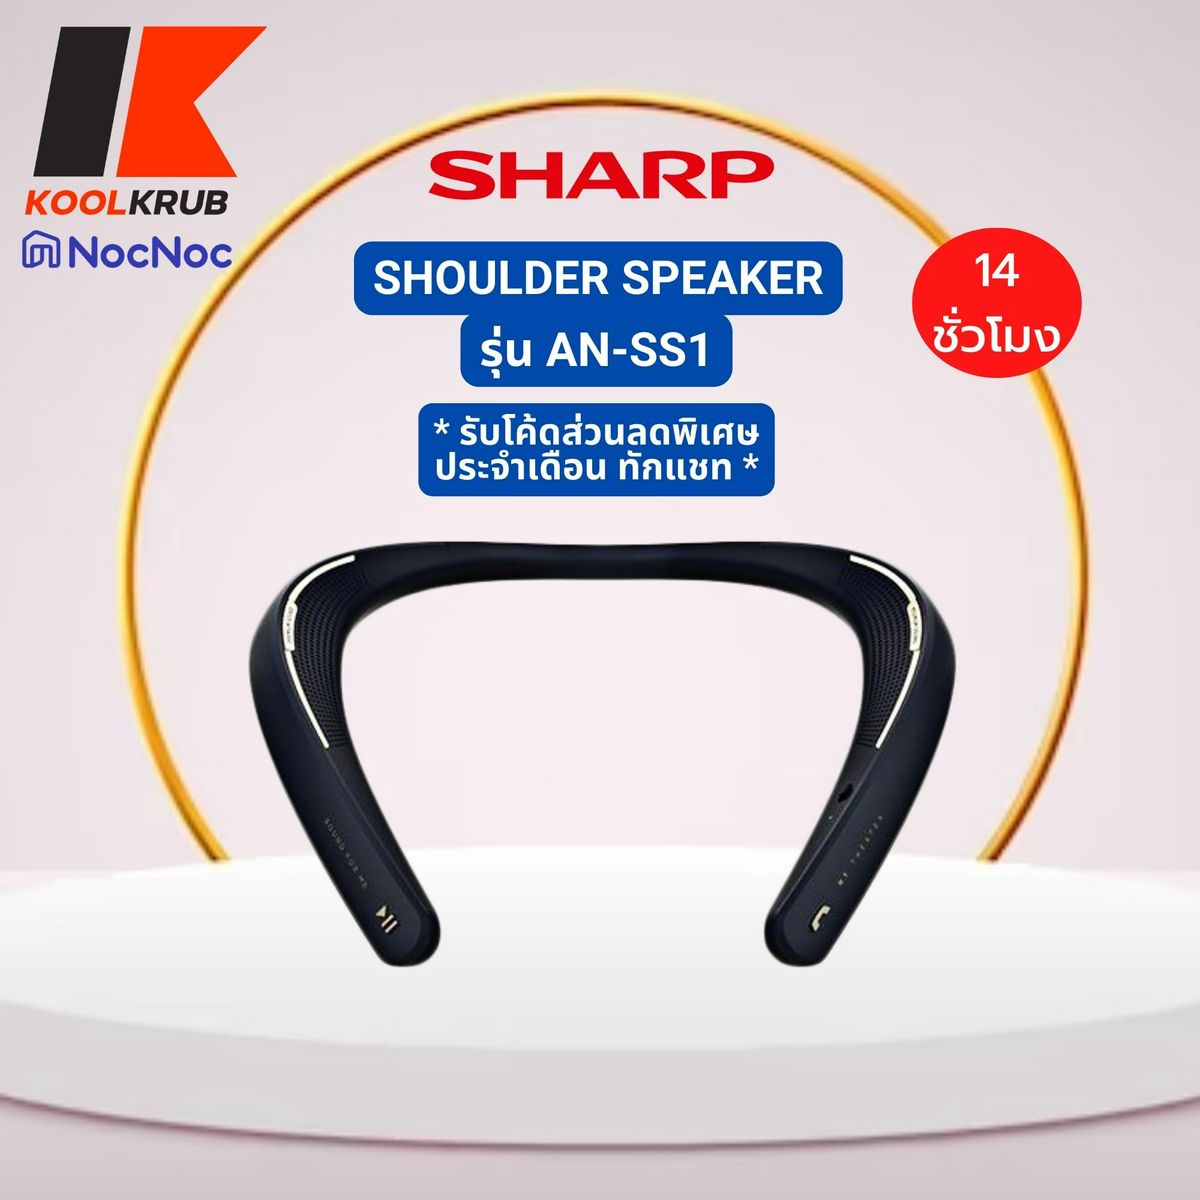 SHARP Ear Free Bluetooth Shoulder Speaker รุ่น AN-SS1 แบต 14